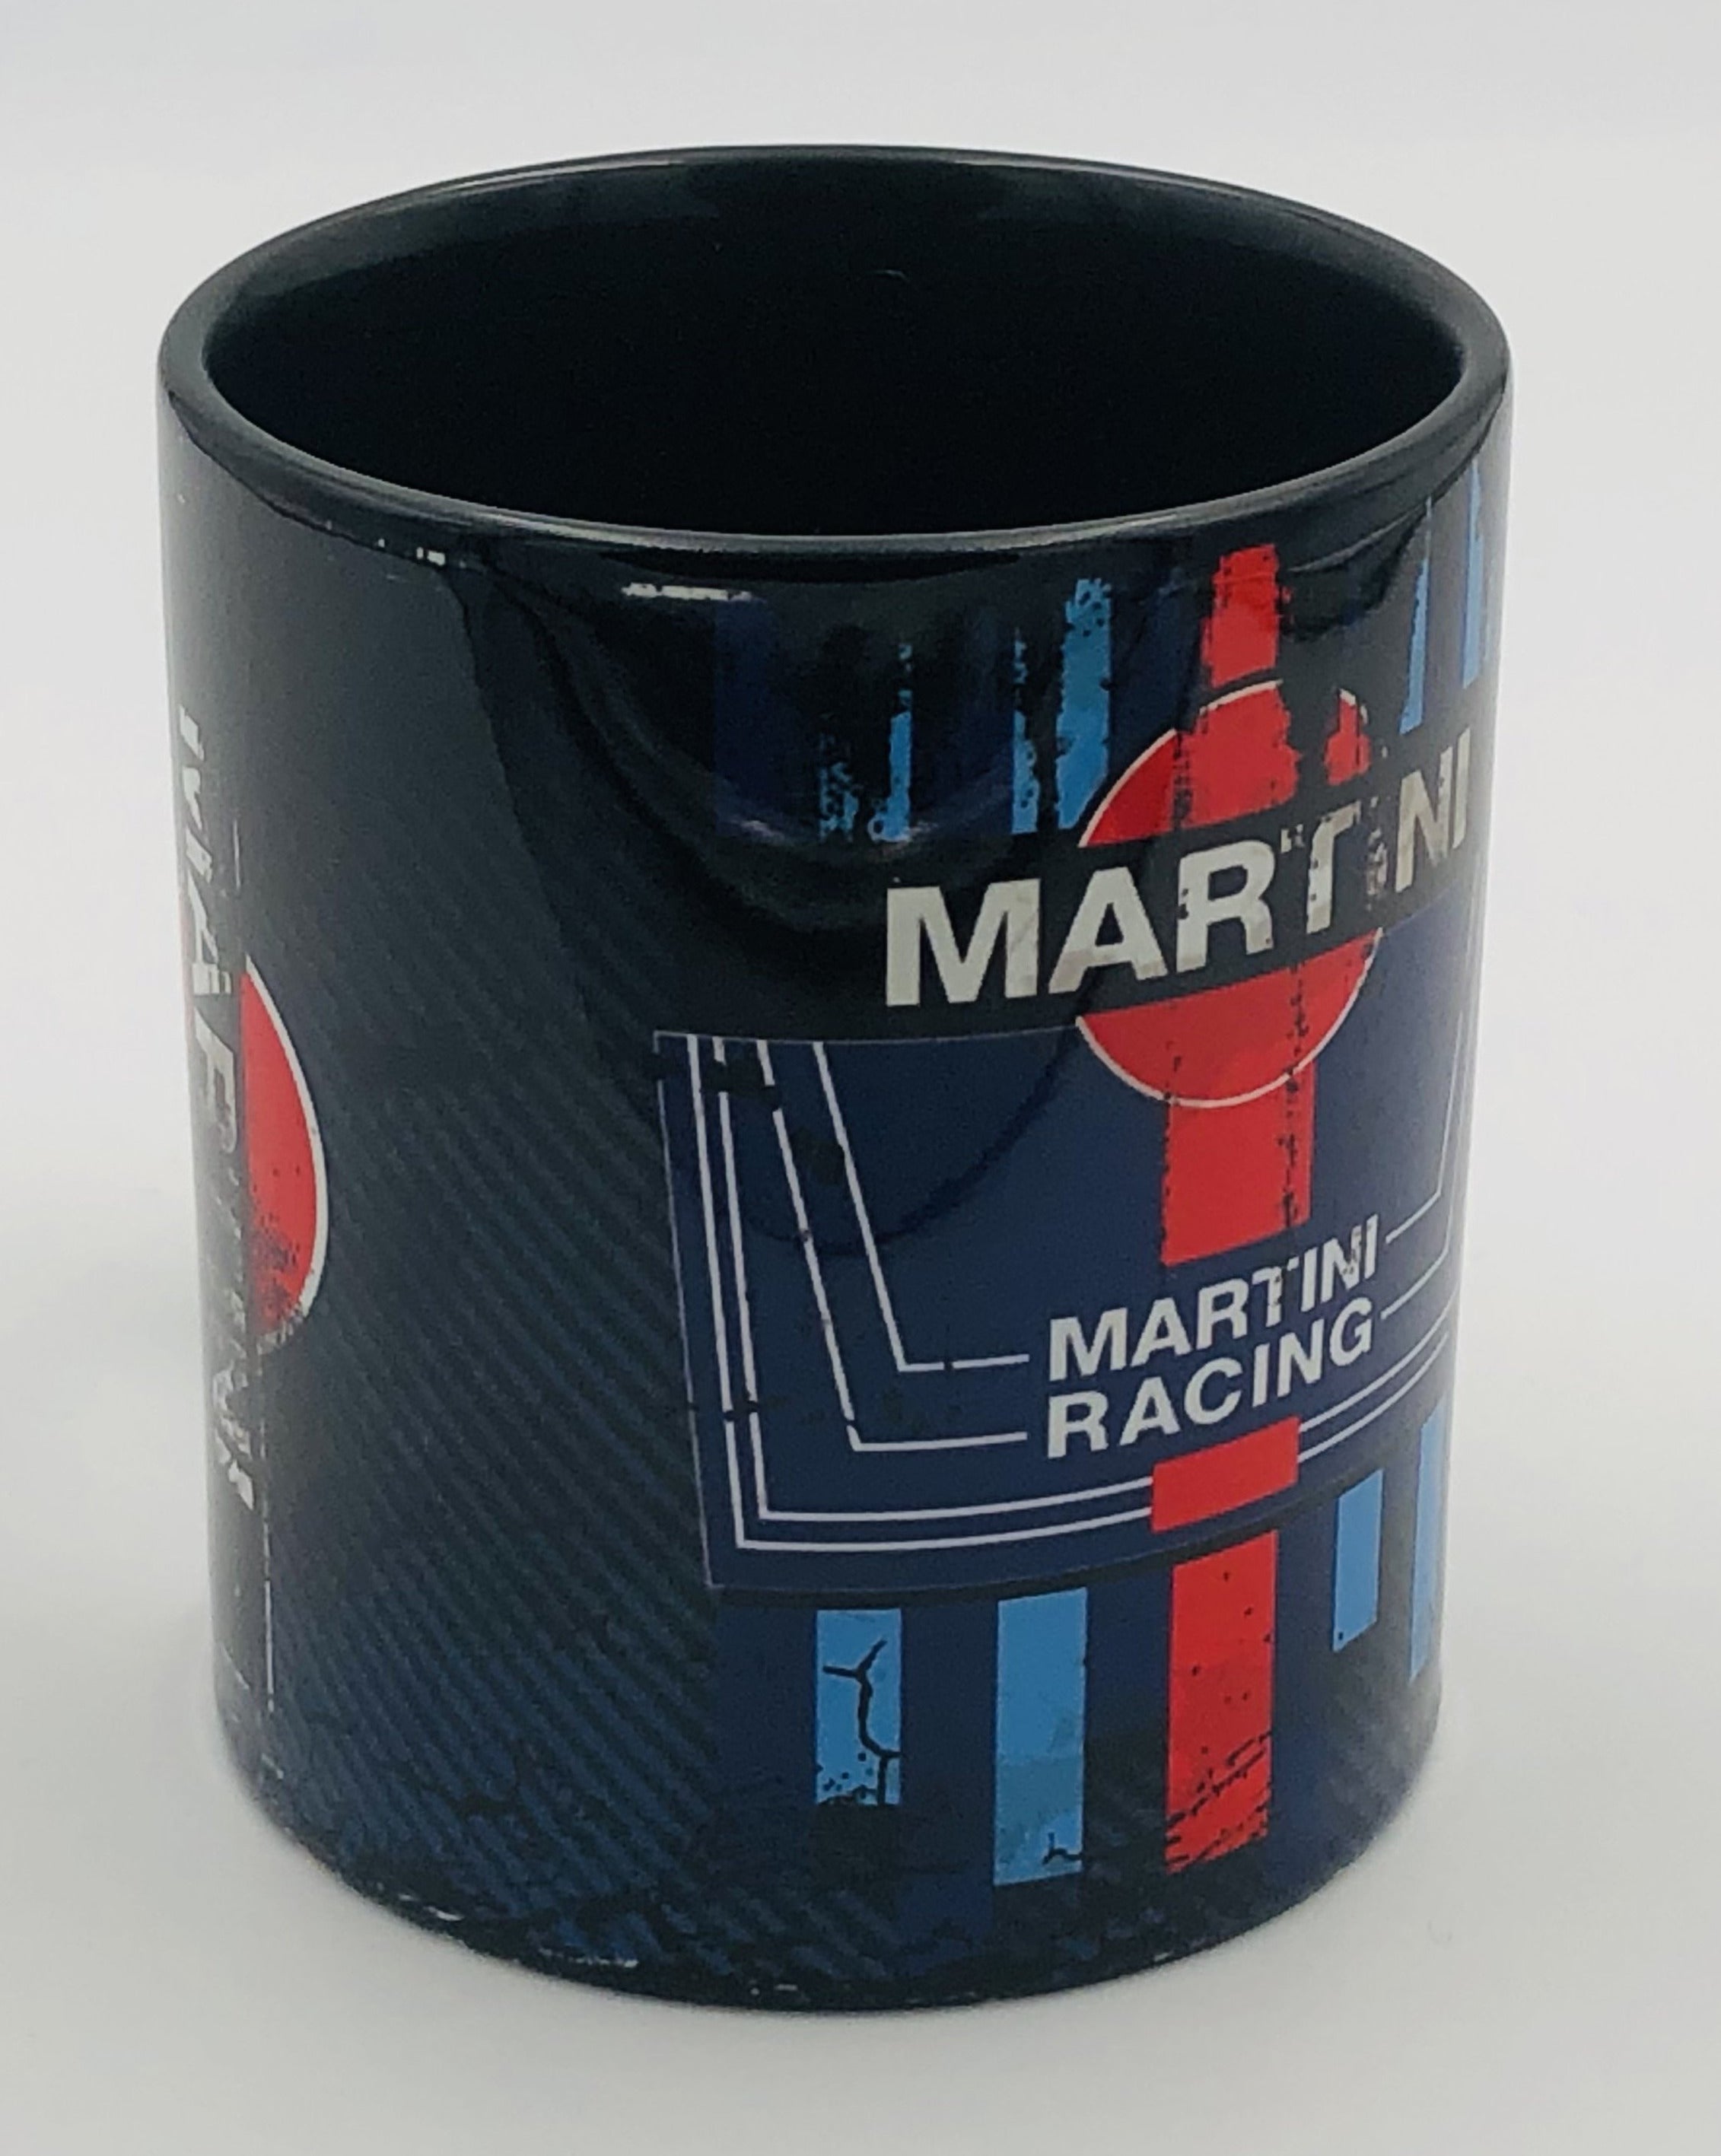 Vintage Becher Martini Racing